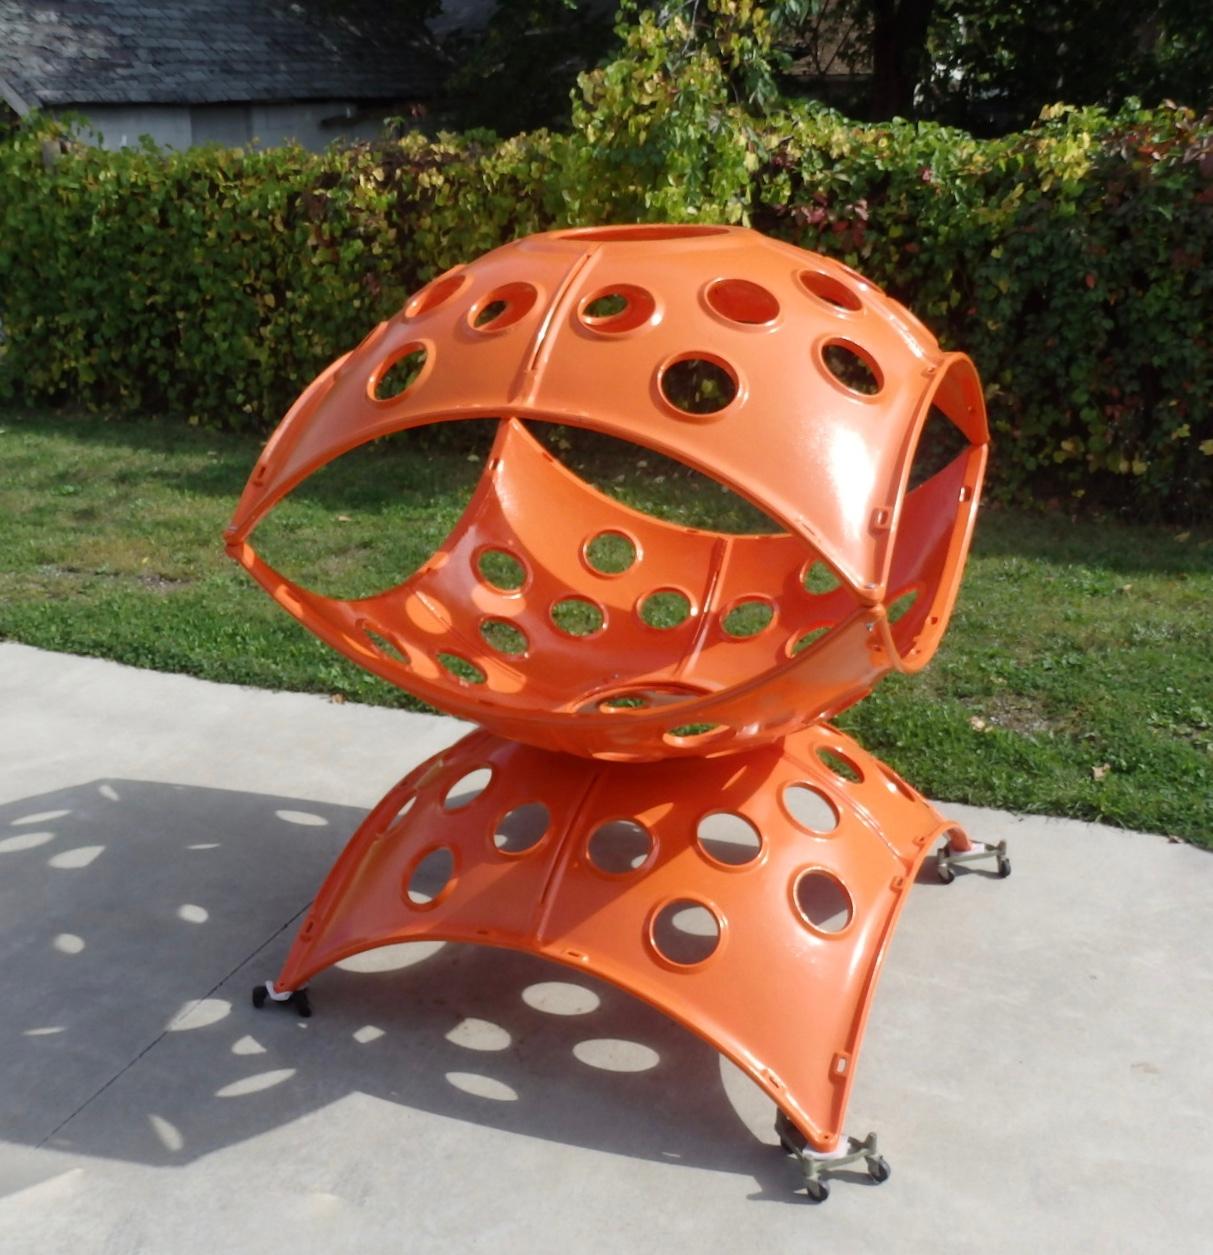 Mid-Century Modern Large Modular Cast Aluminum Orange Yard Art Indoor Outdoor Playground Sculpture For Sale